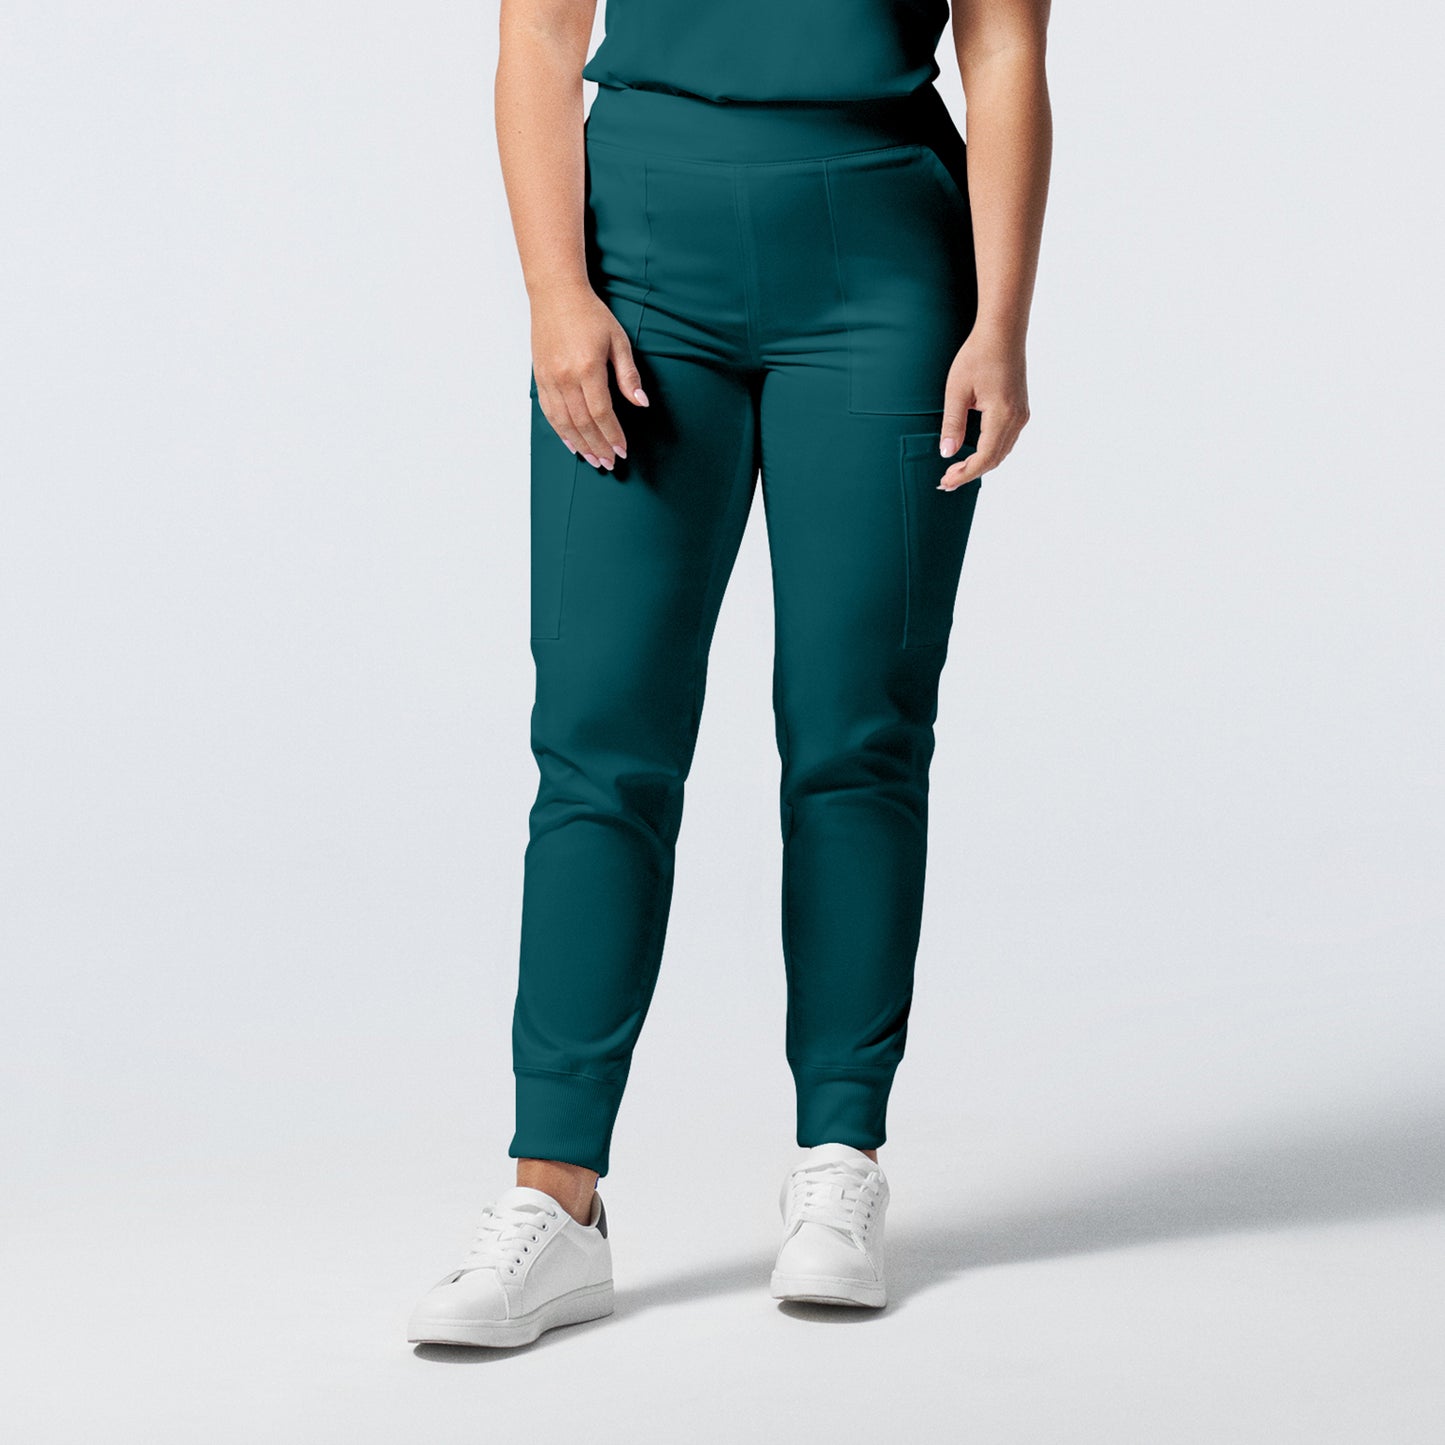 Women's jogger pants - PROFLEX - L406